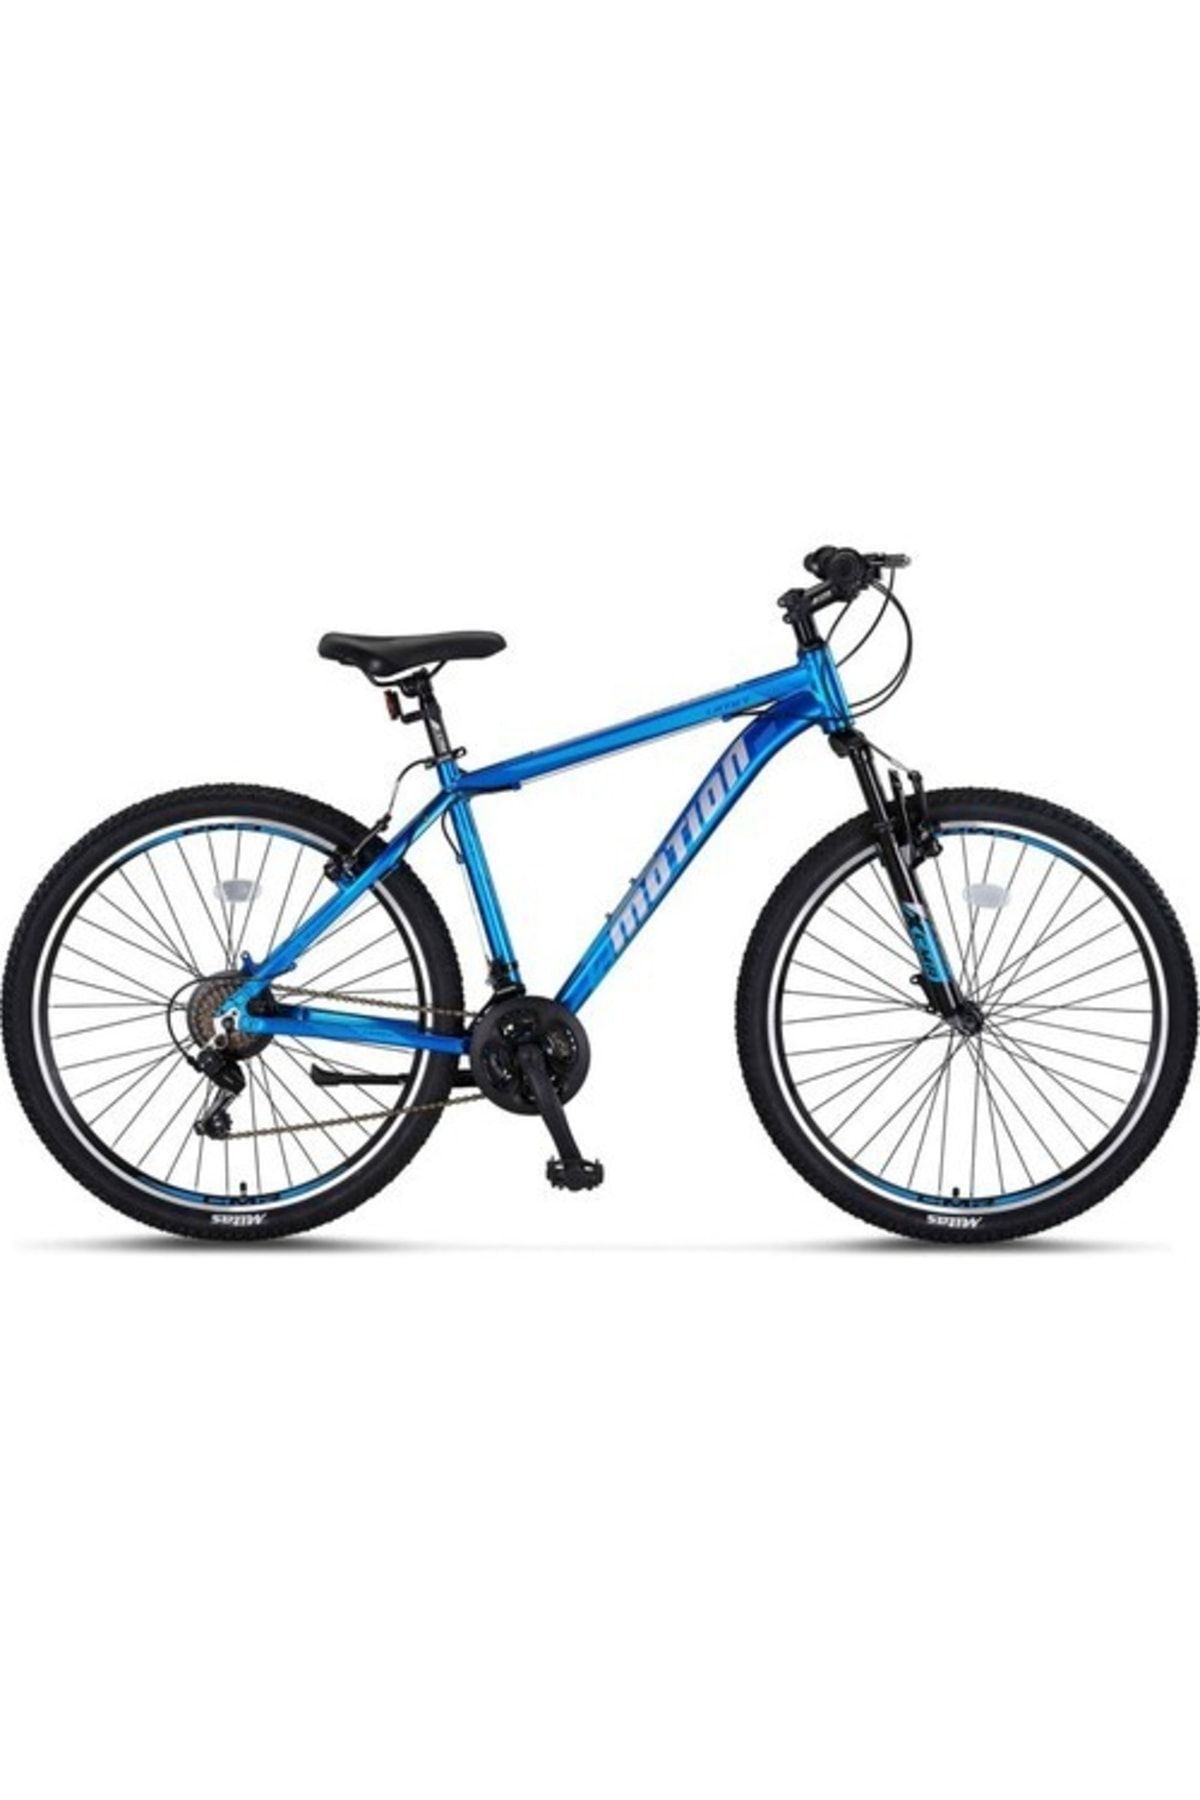 Ümit Bisiklet Ümit 2977 Motion 29 Jant 18 Kadro Dağ Bisikleti (175 Cm Üstü Boy) Dark Blue